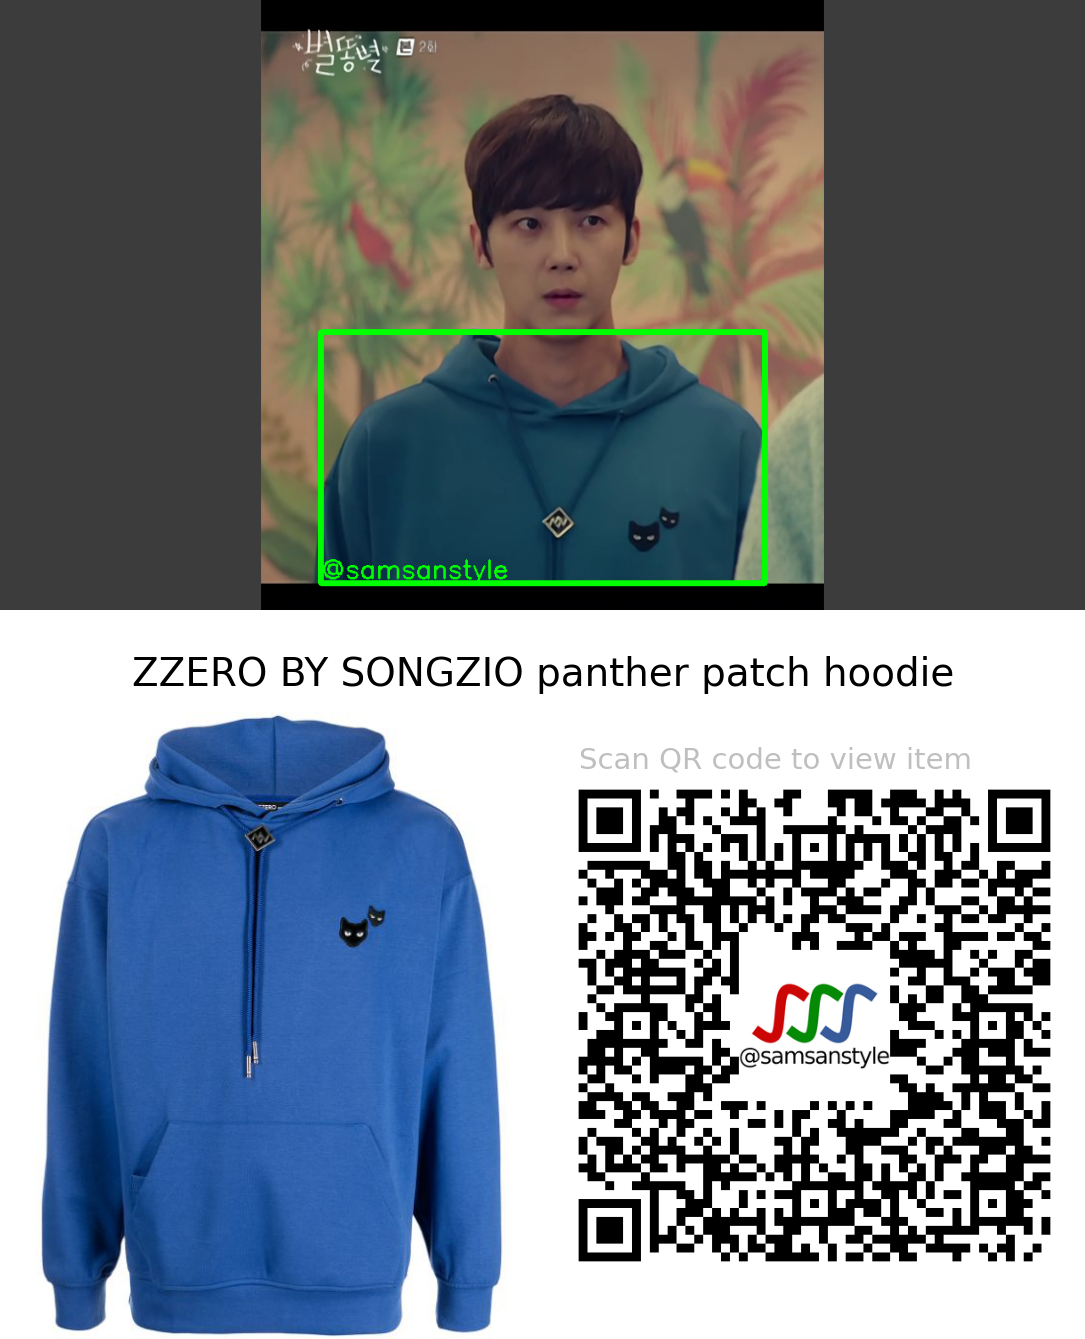 Yoon Jonghoon | Shooting Stars E02 | ZZERO BY SONGZIO panther patch hoodie